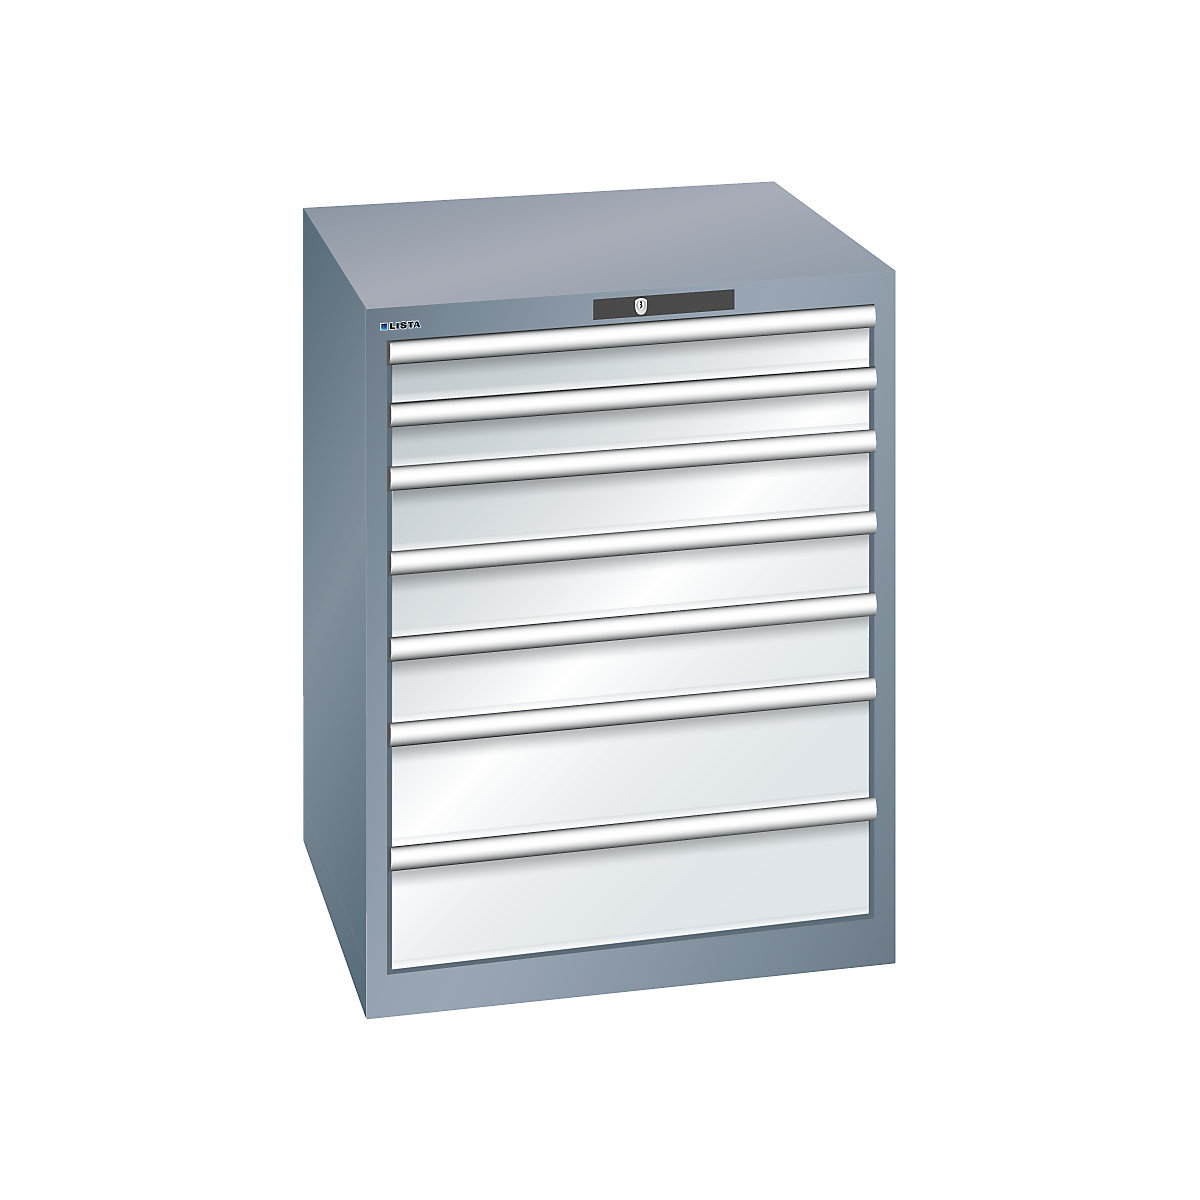 Drawer cupboard, 7 drawers – LISTA, WxDxH 717 x 725 x 850 mm, max. load 75 kg, grey metallic / light grey-12